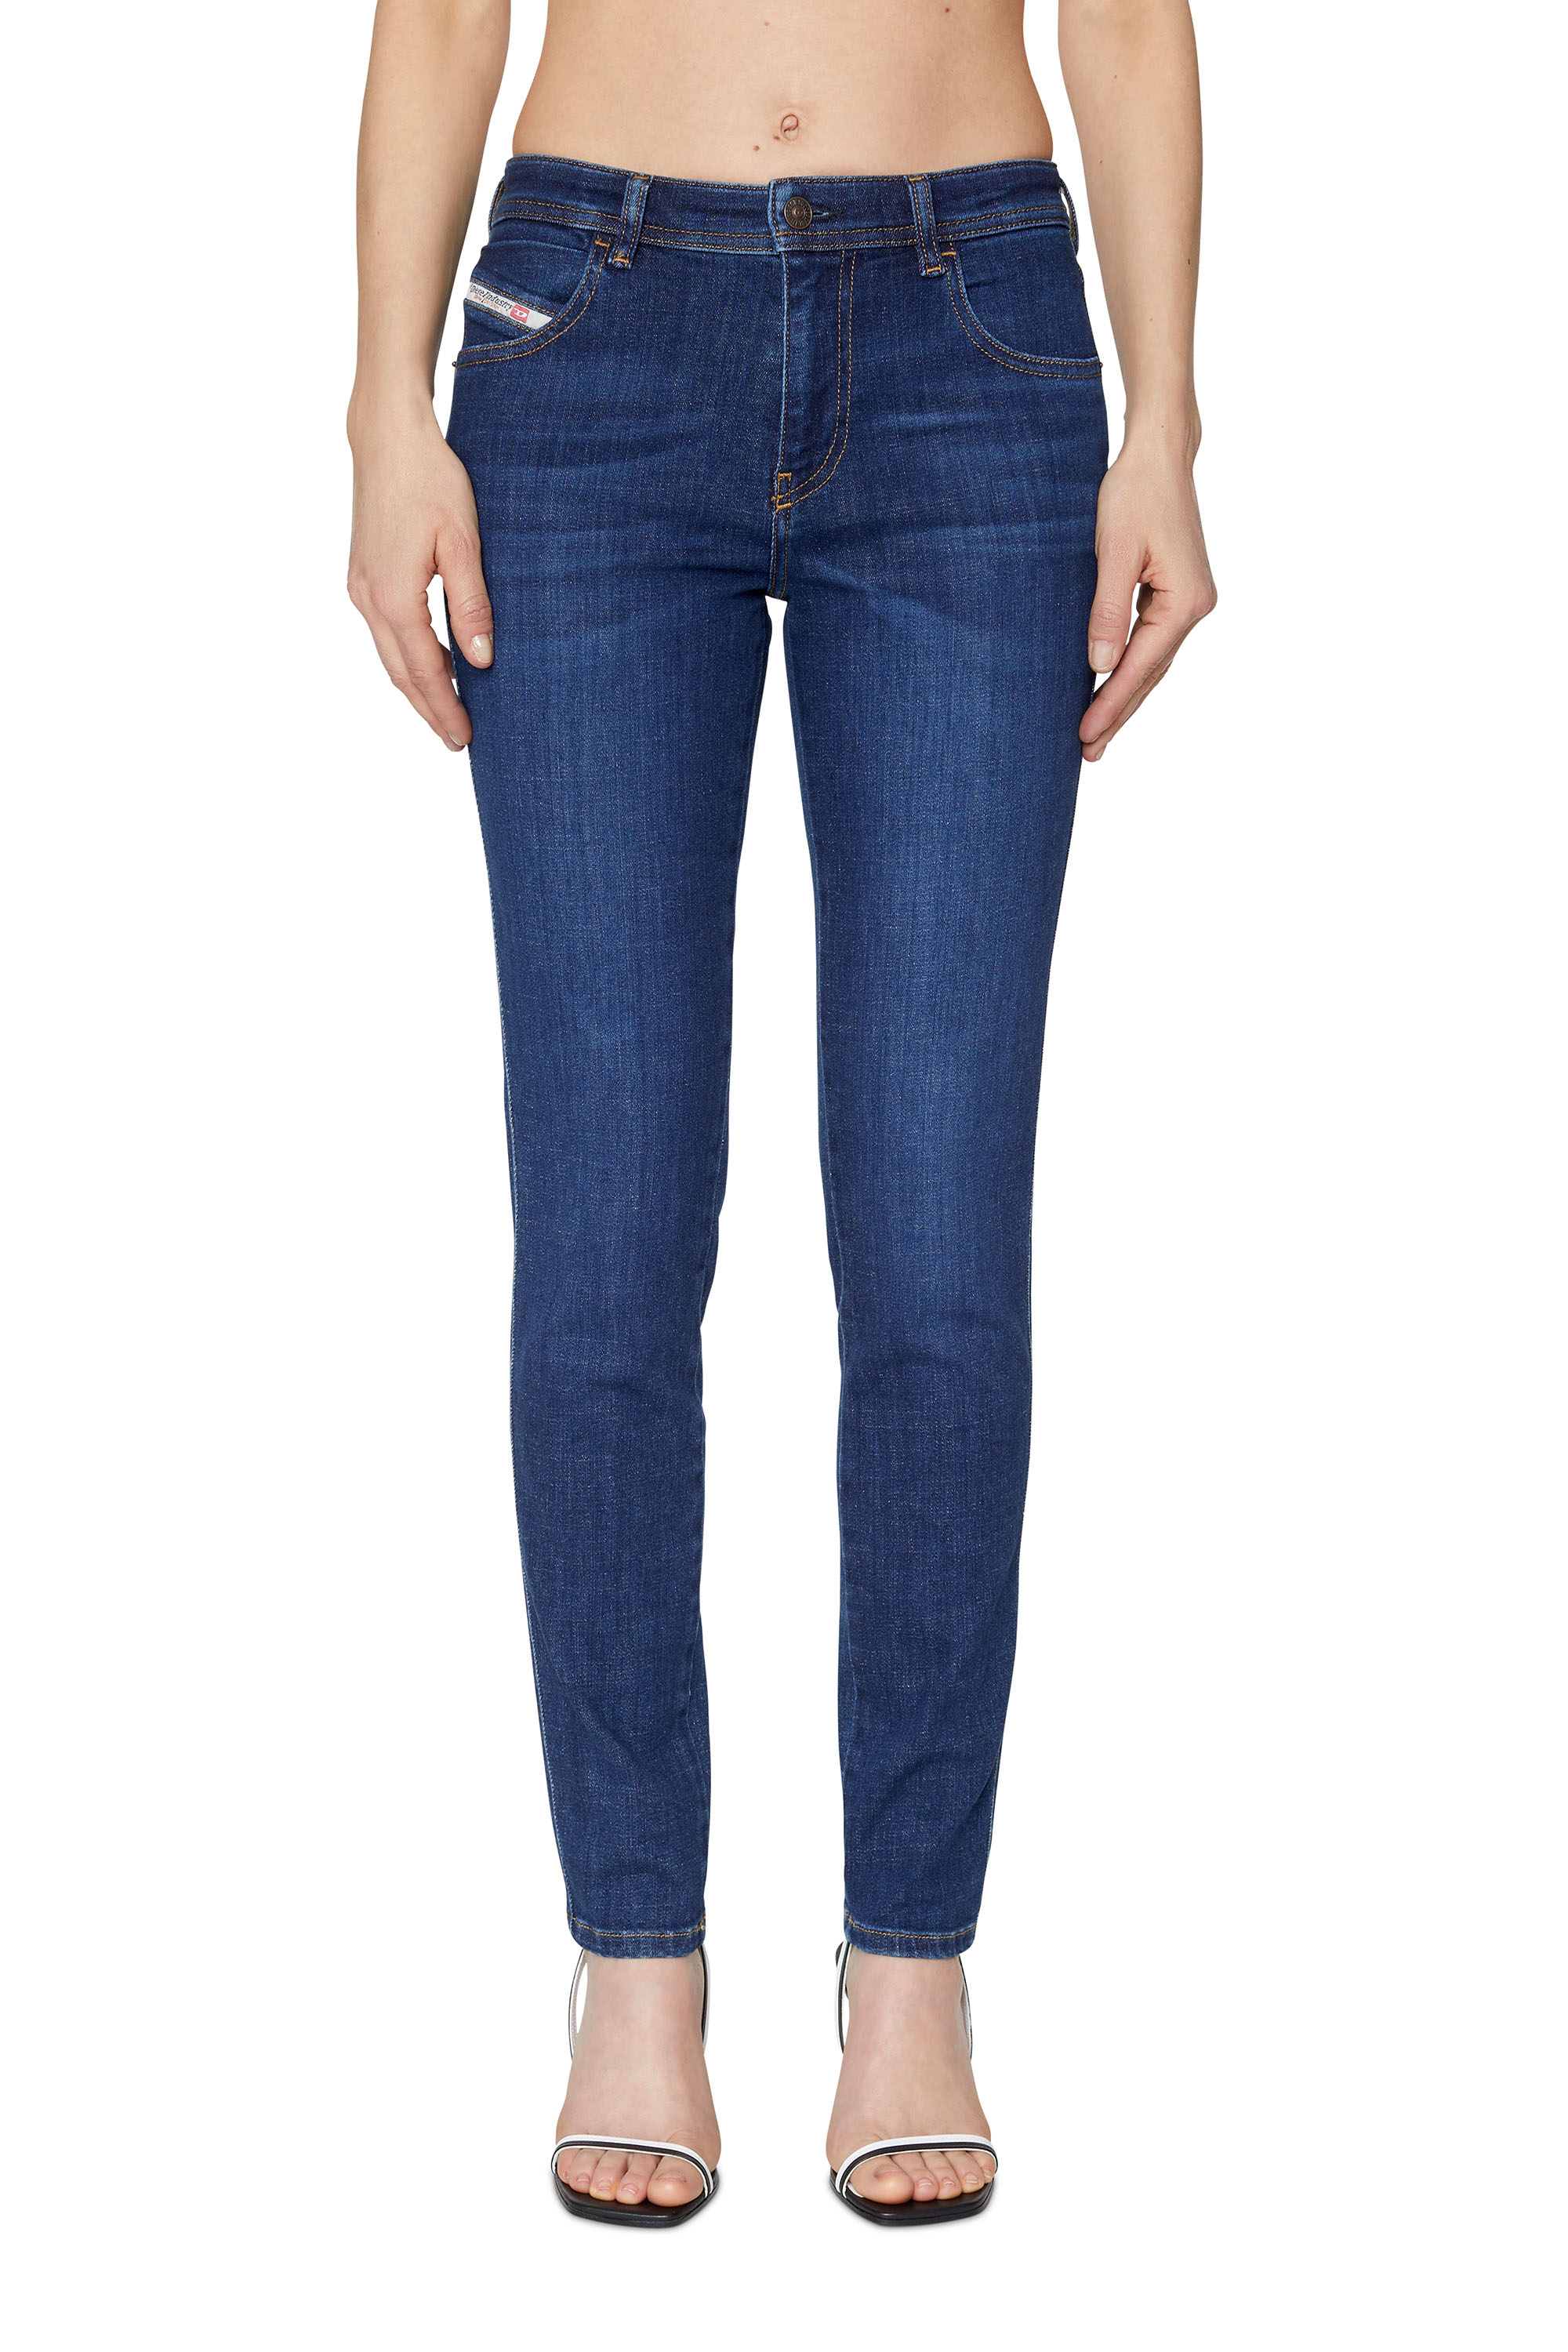 2015 BABHILA 09C58 Skinny Jeans, ダークブルー - Jeans